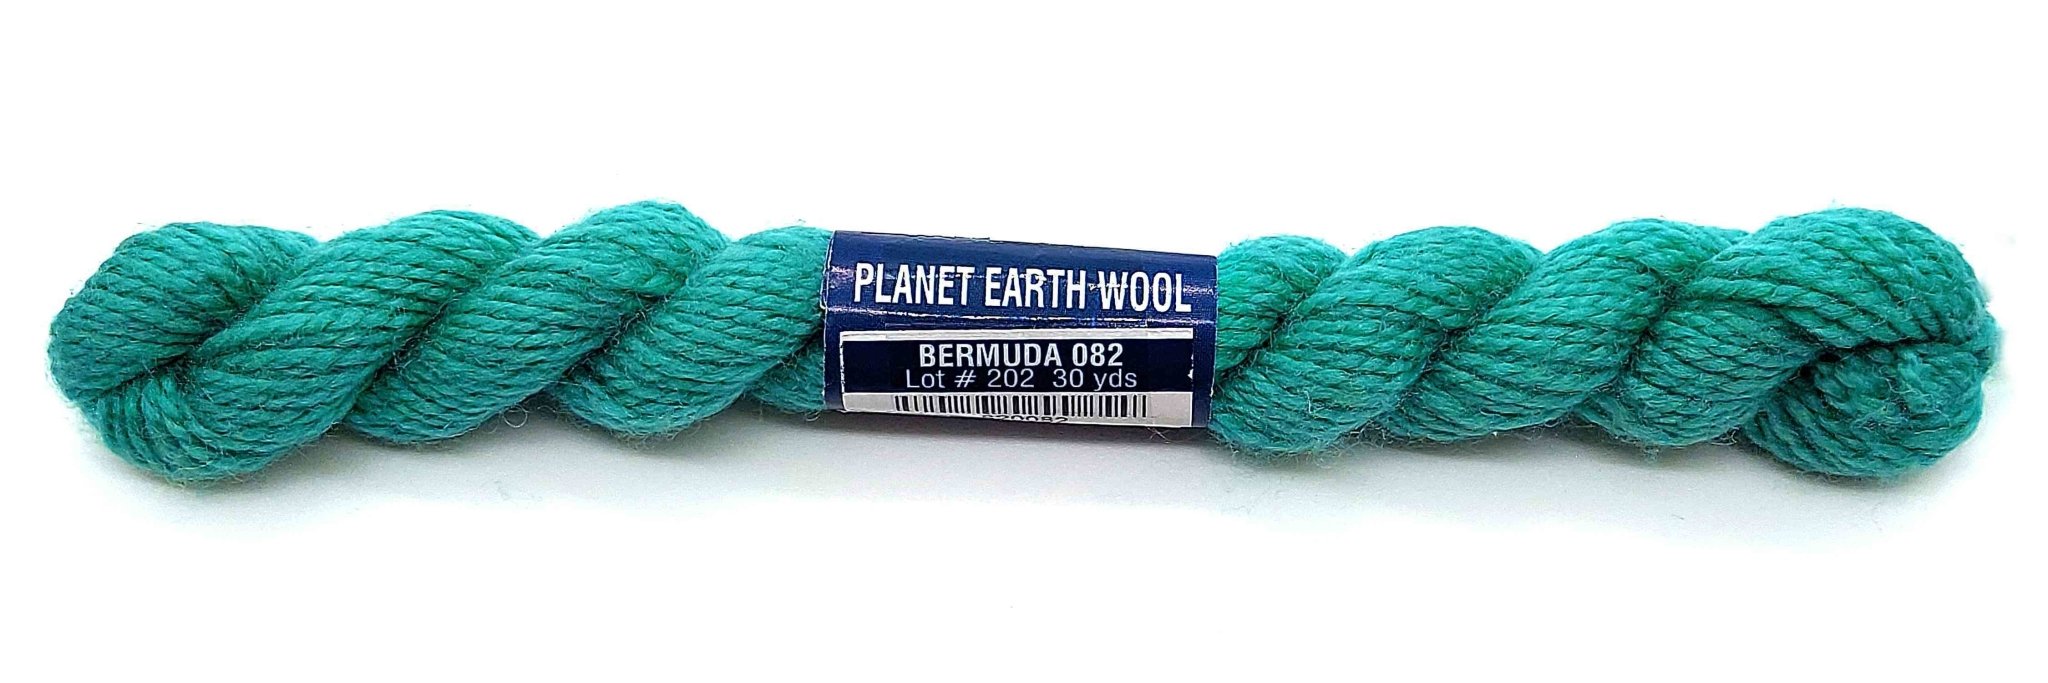 Planet Earth Wool 082 Bermuda - The Flying Needles